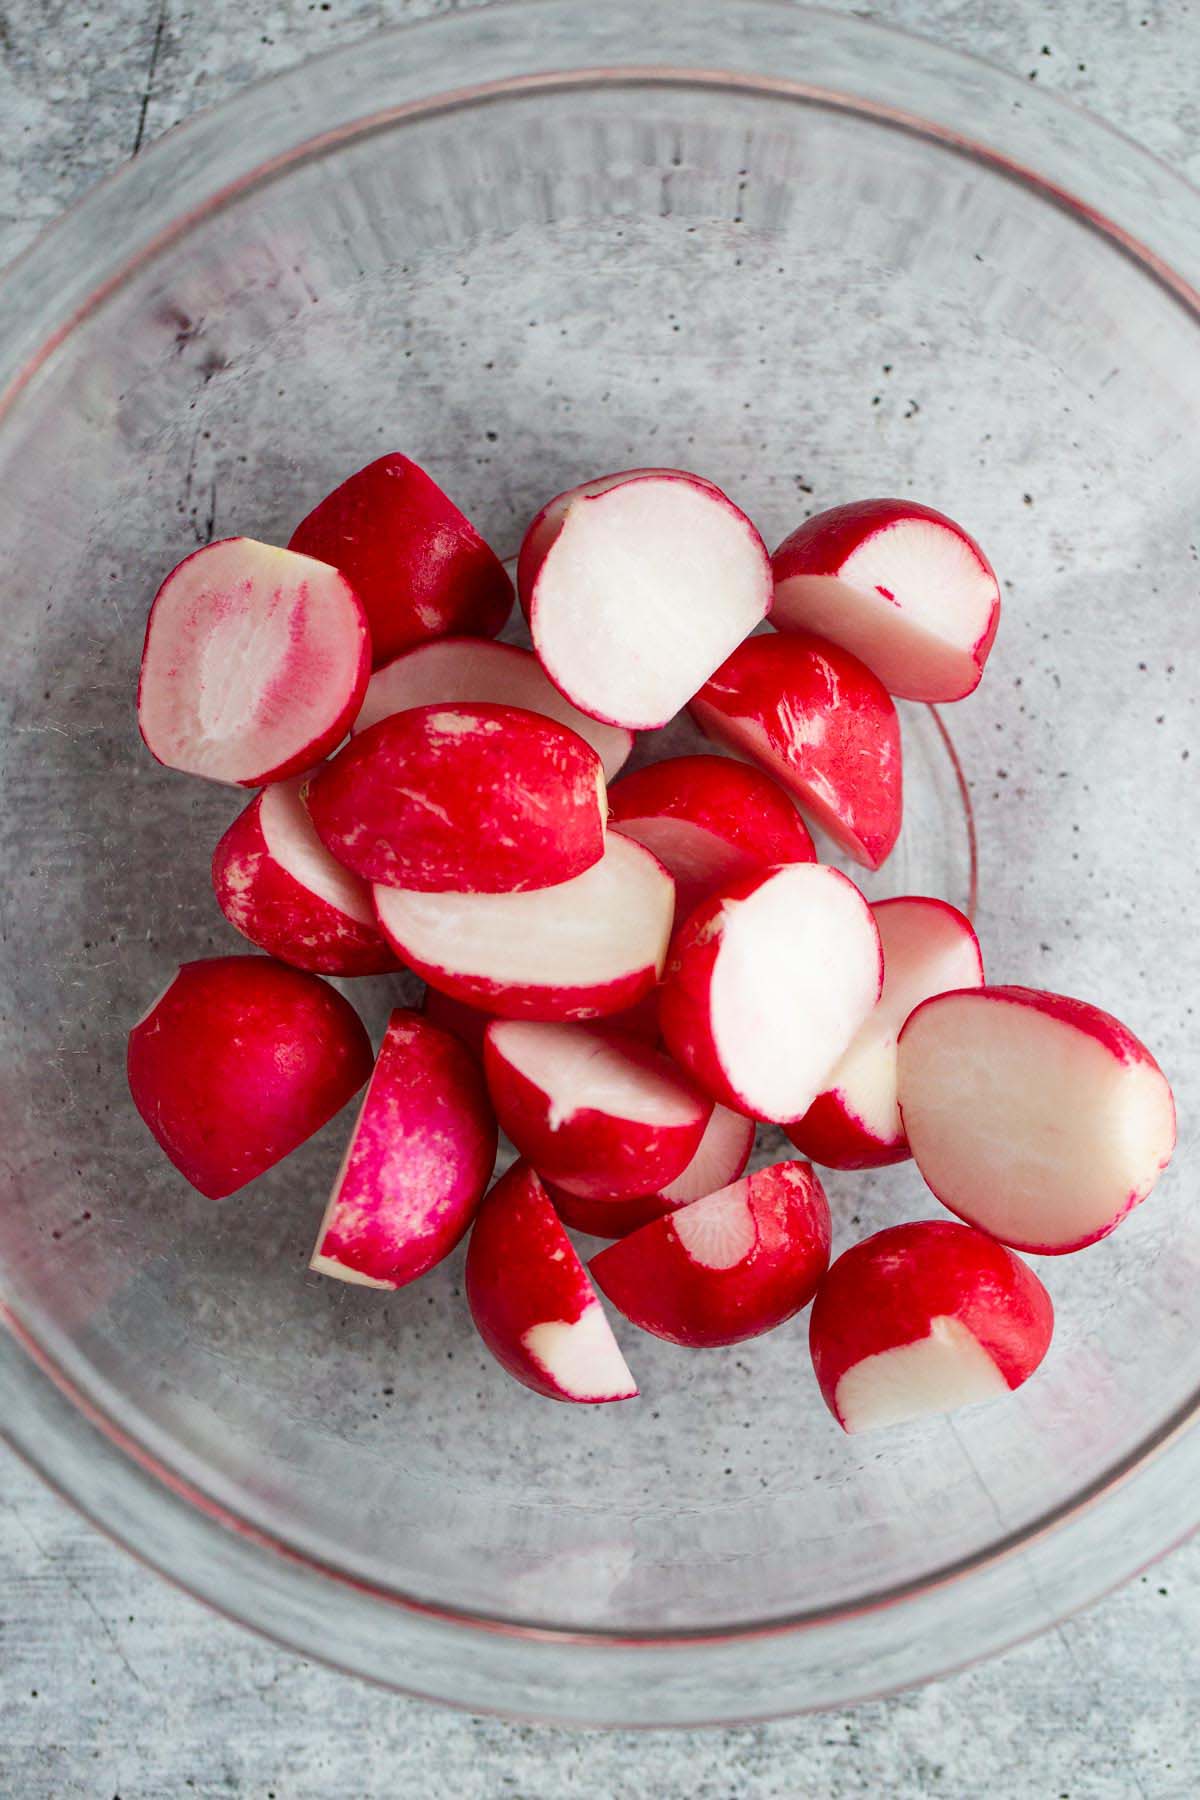 Cut radishes in a bowl.